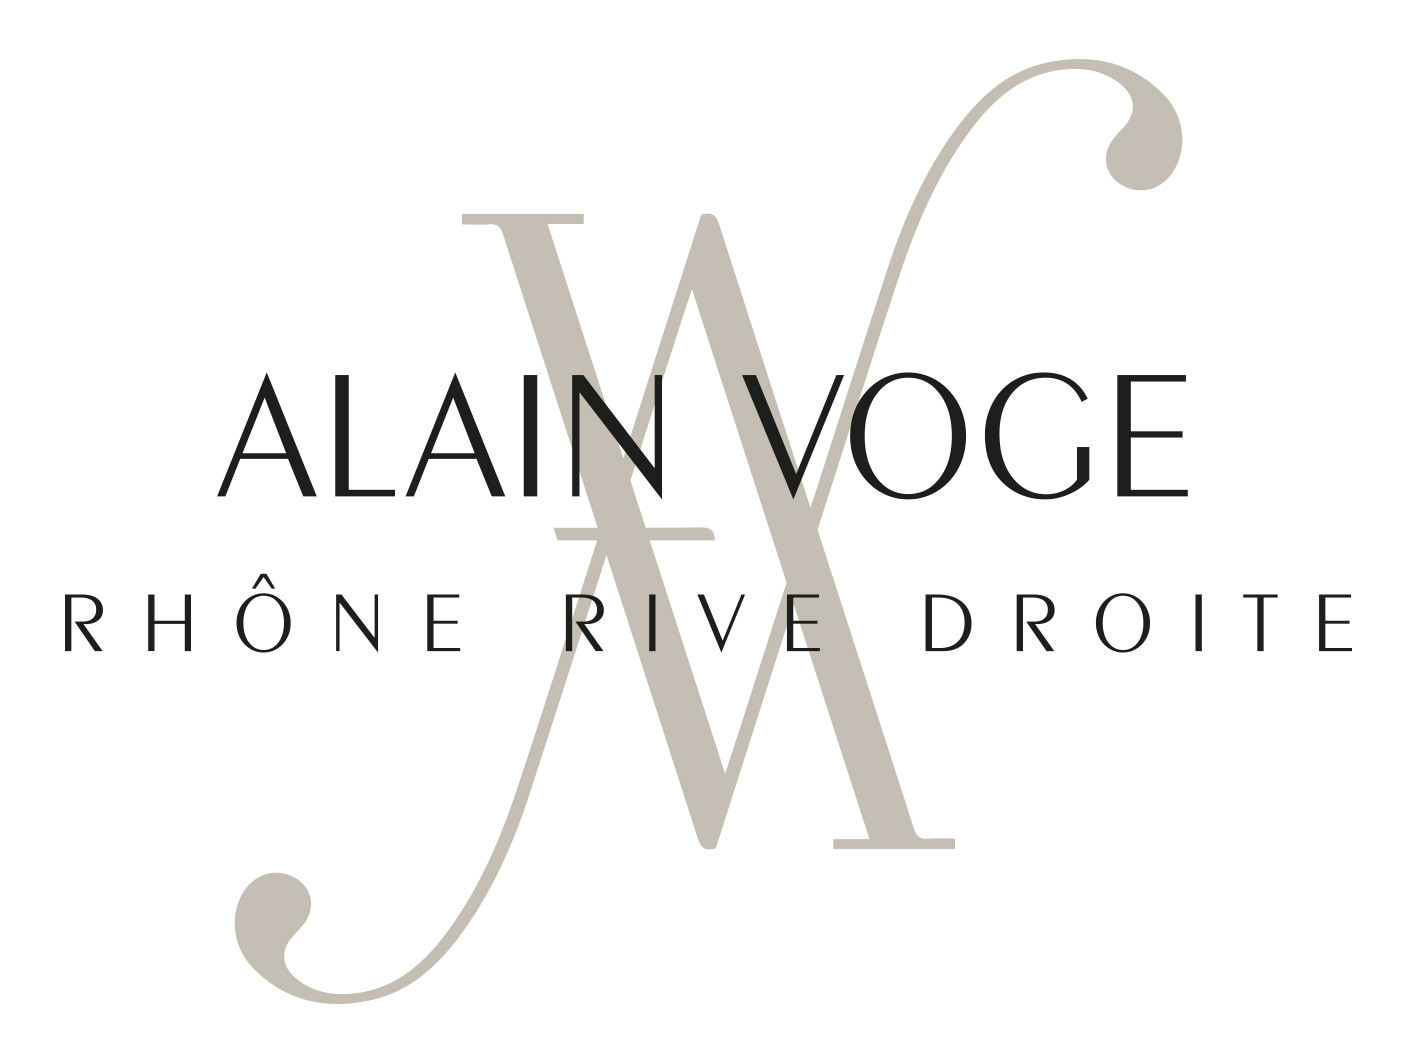 Domaine Alain Voge